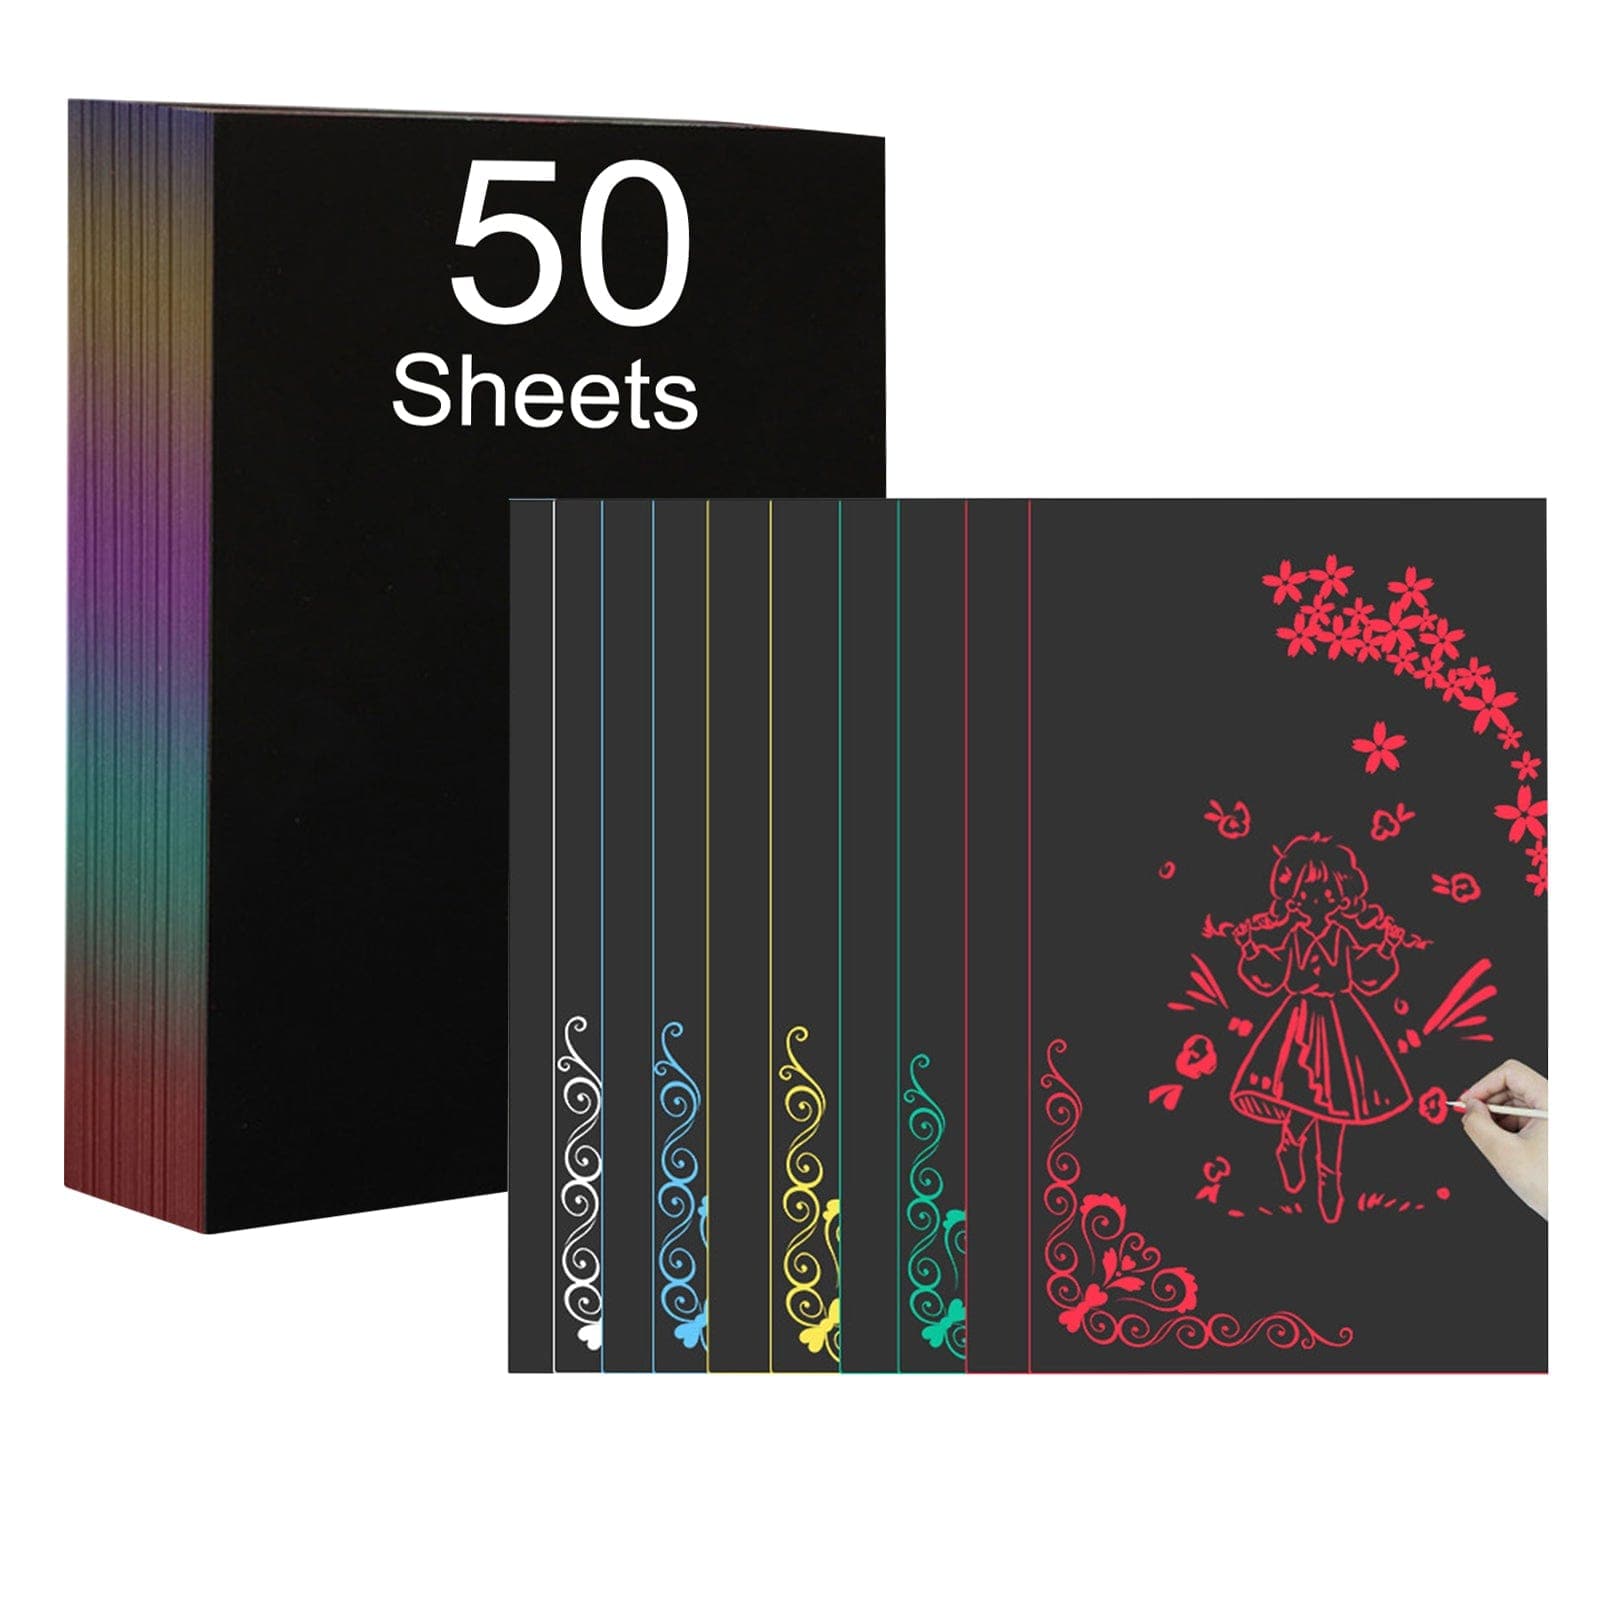 50 Pcs A4 Size Magic Scratch Paper Set - 5 colors magic scratch paper